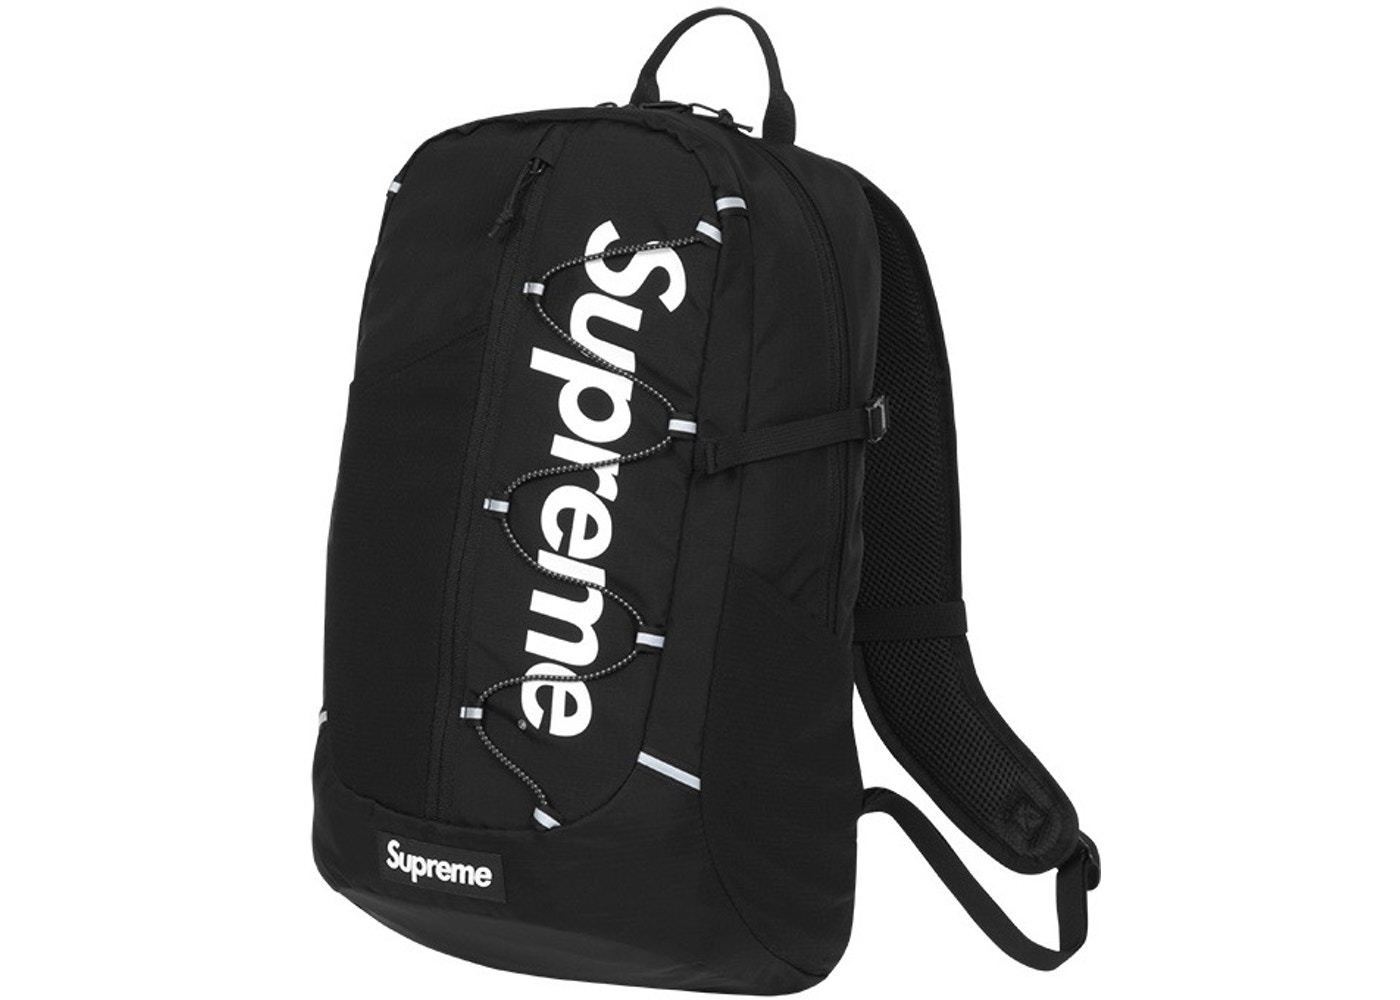 Supreme Backpack Bag Box Logo School Fast Free US Shipping New REFLECTIVE SS17 - Backpacks, Bags ...